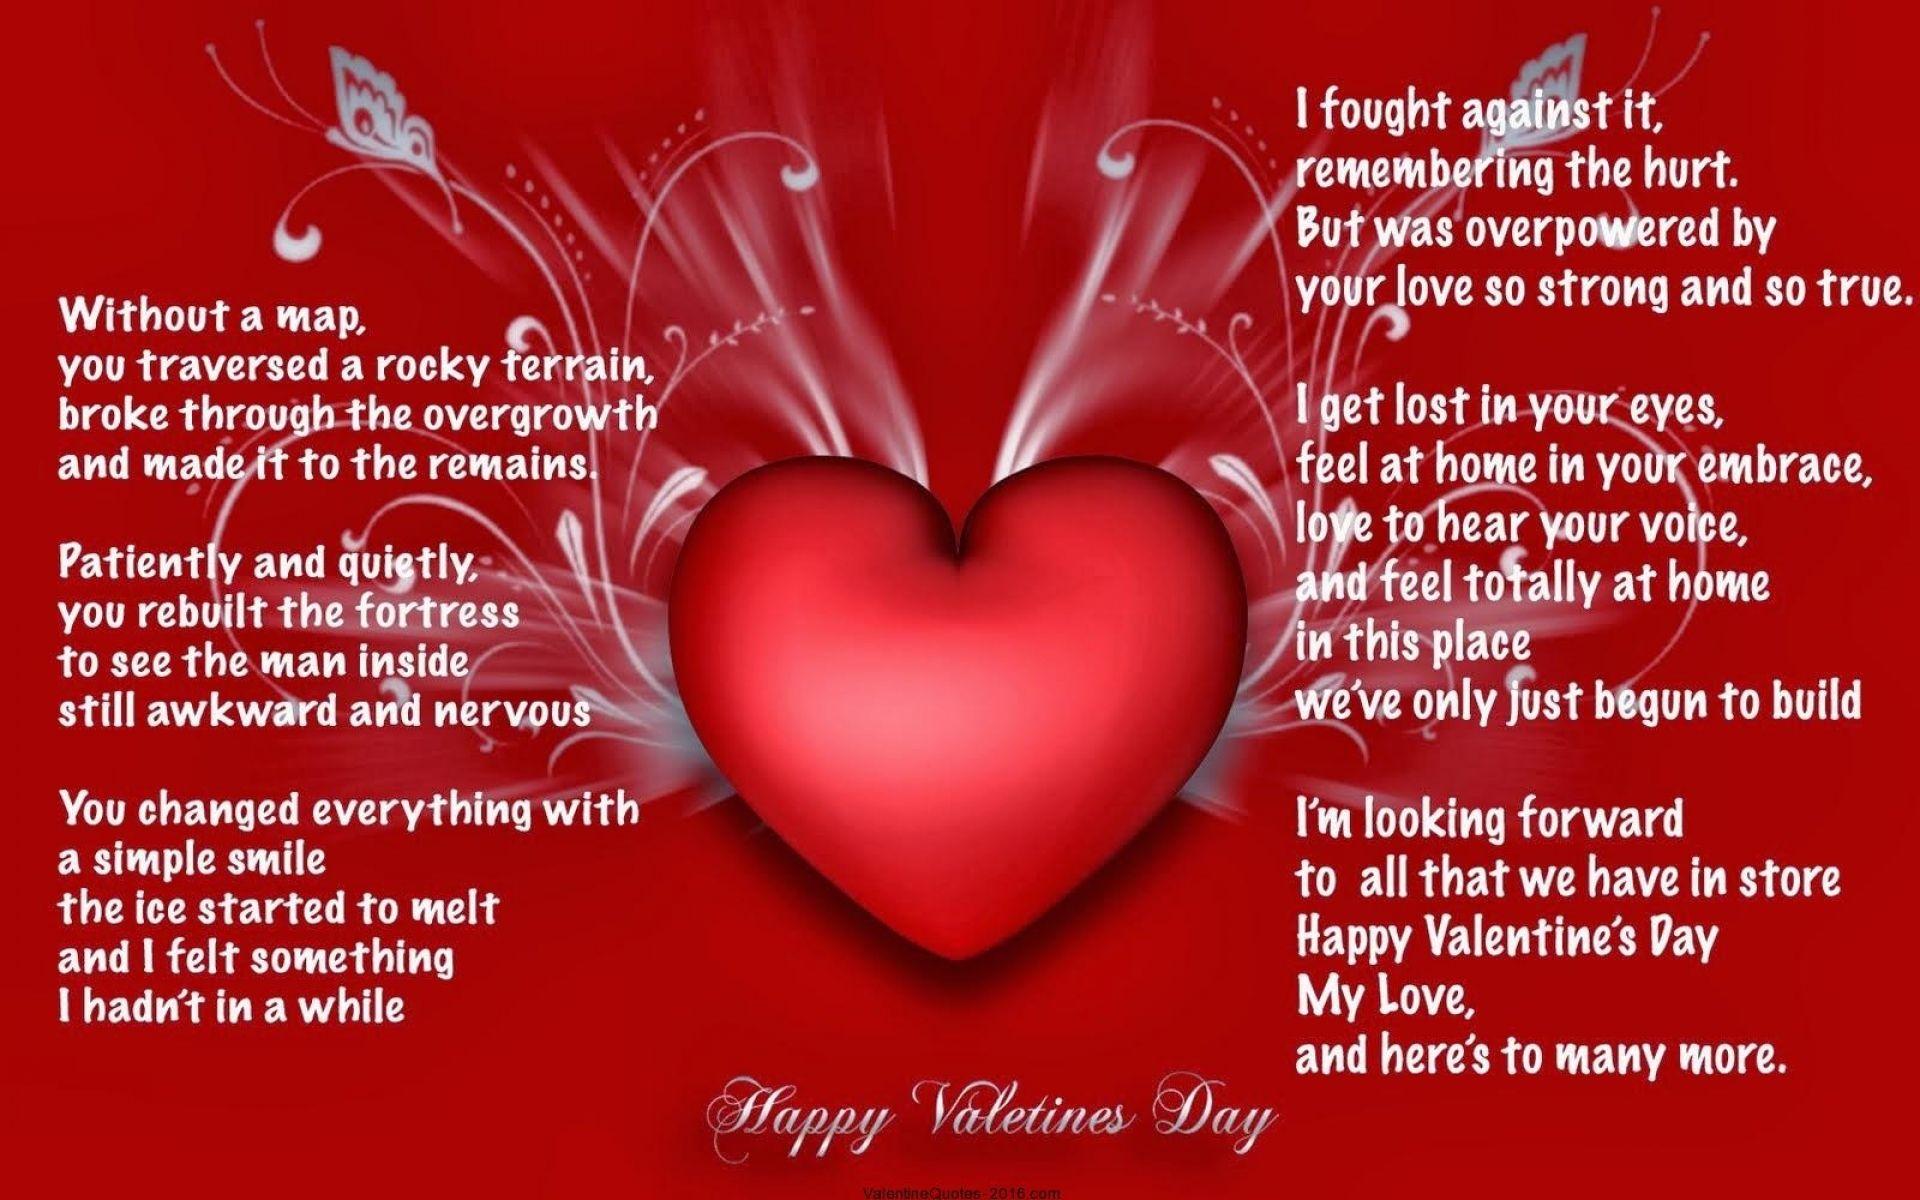 Happy Valentines Day My Love Image. Love. Valentine's